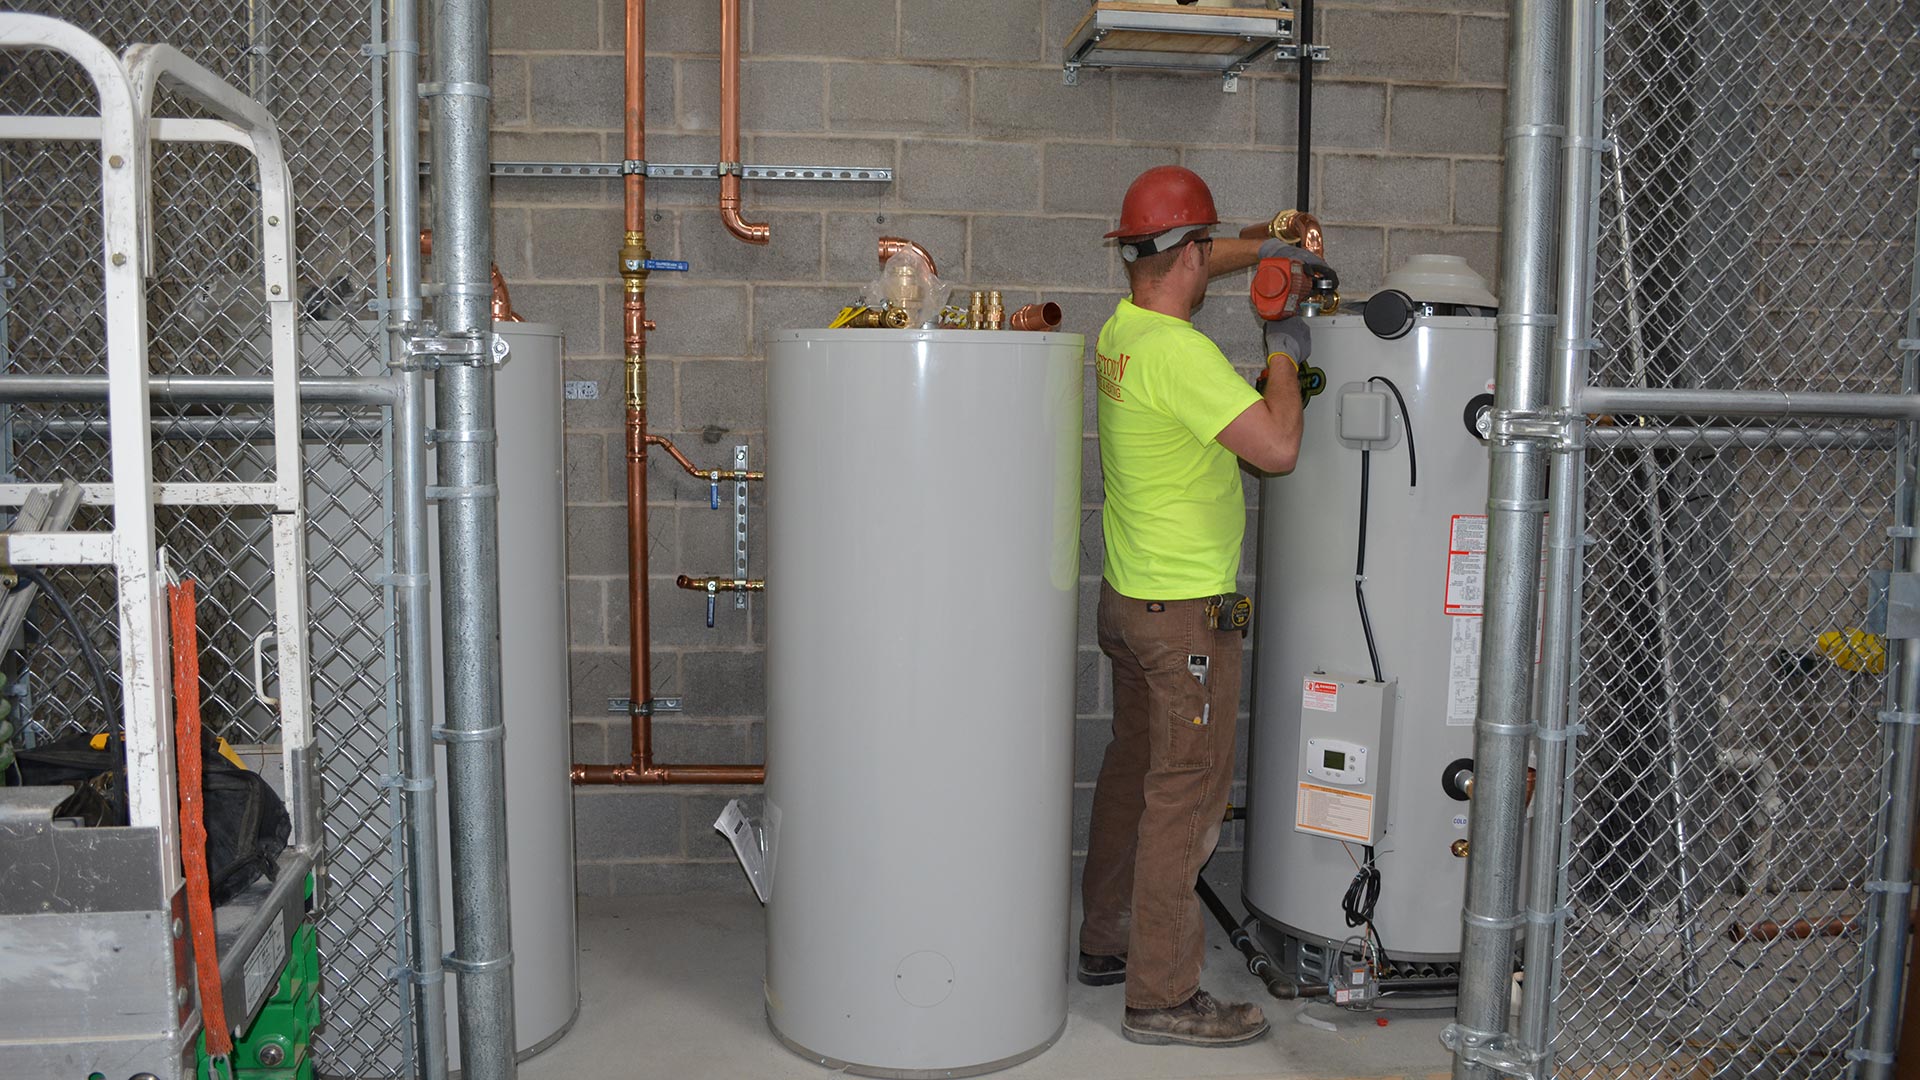 Hometown Plumbing and Heating Quad Cities Iowa Projects Sam's Club plumbing